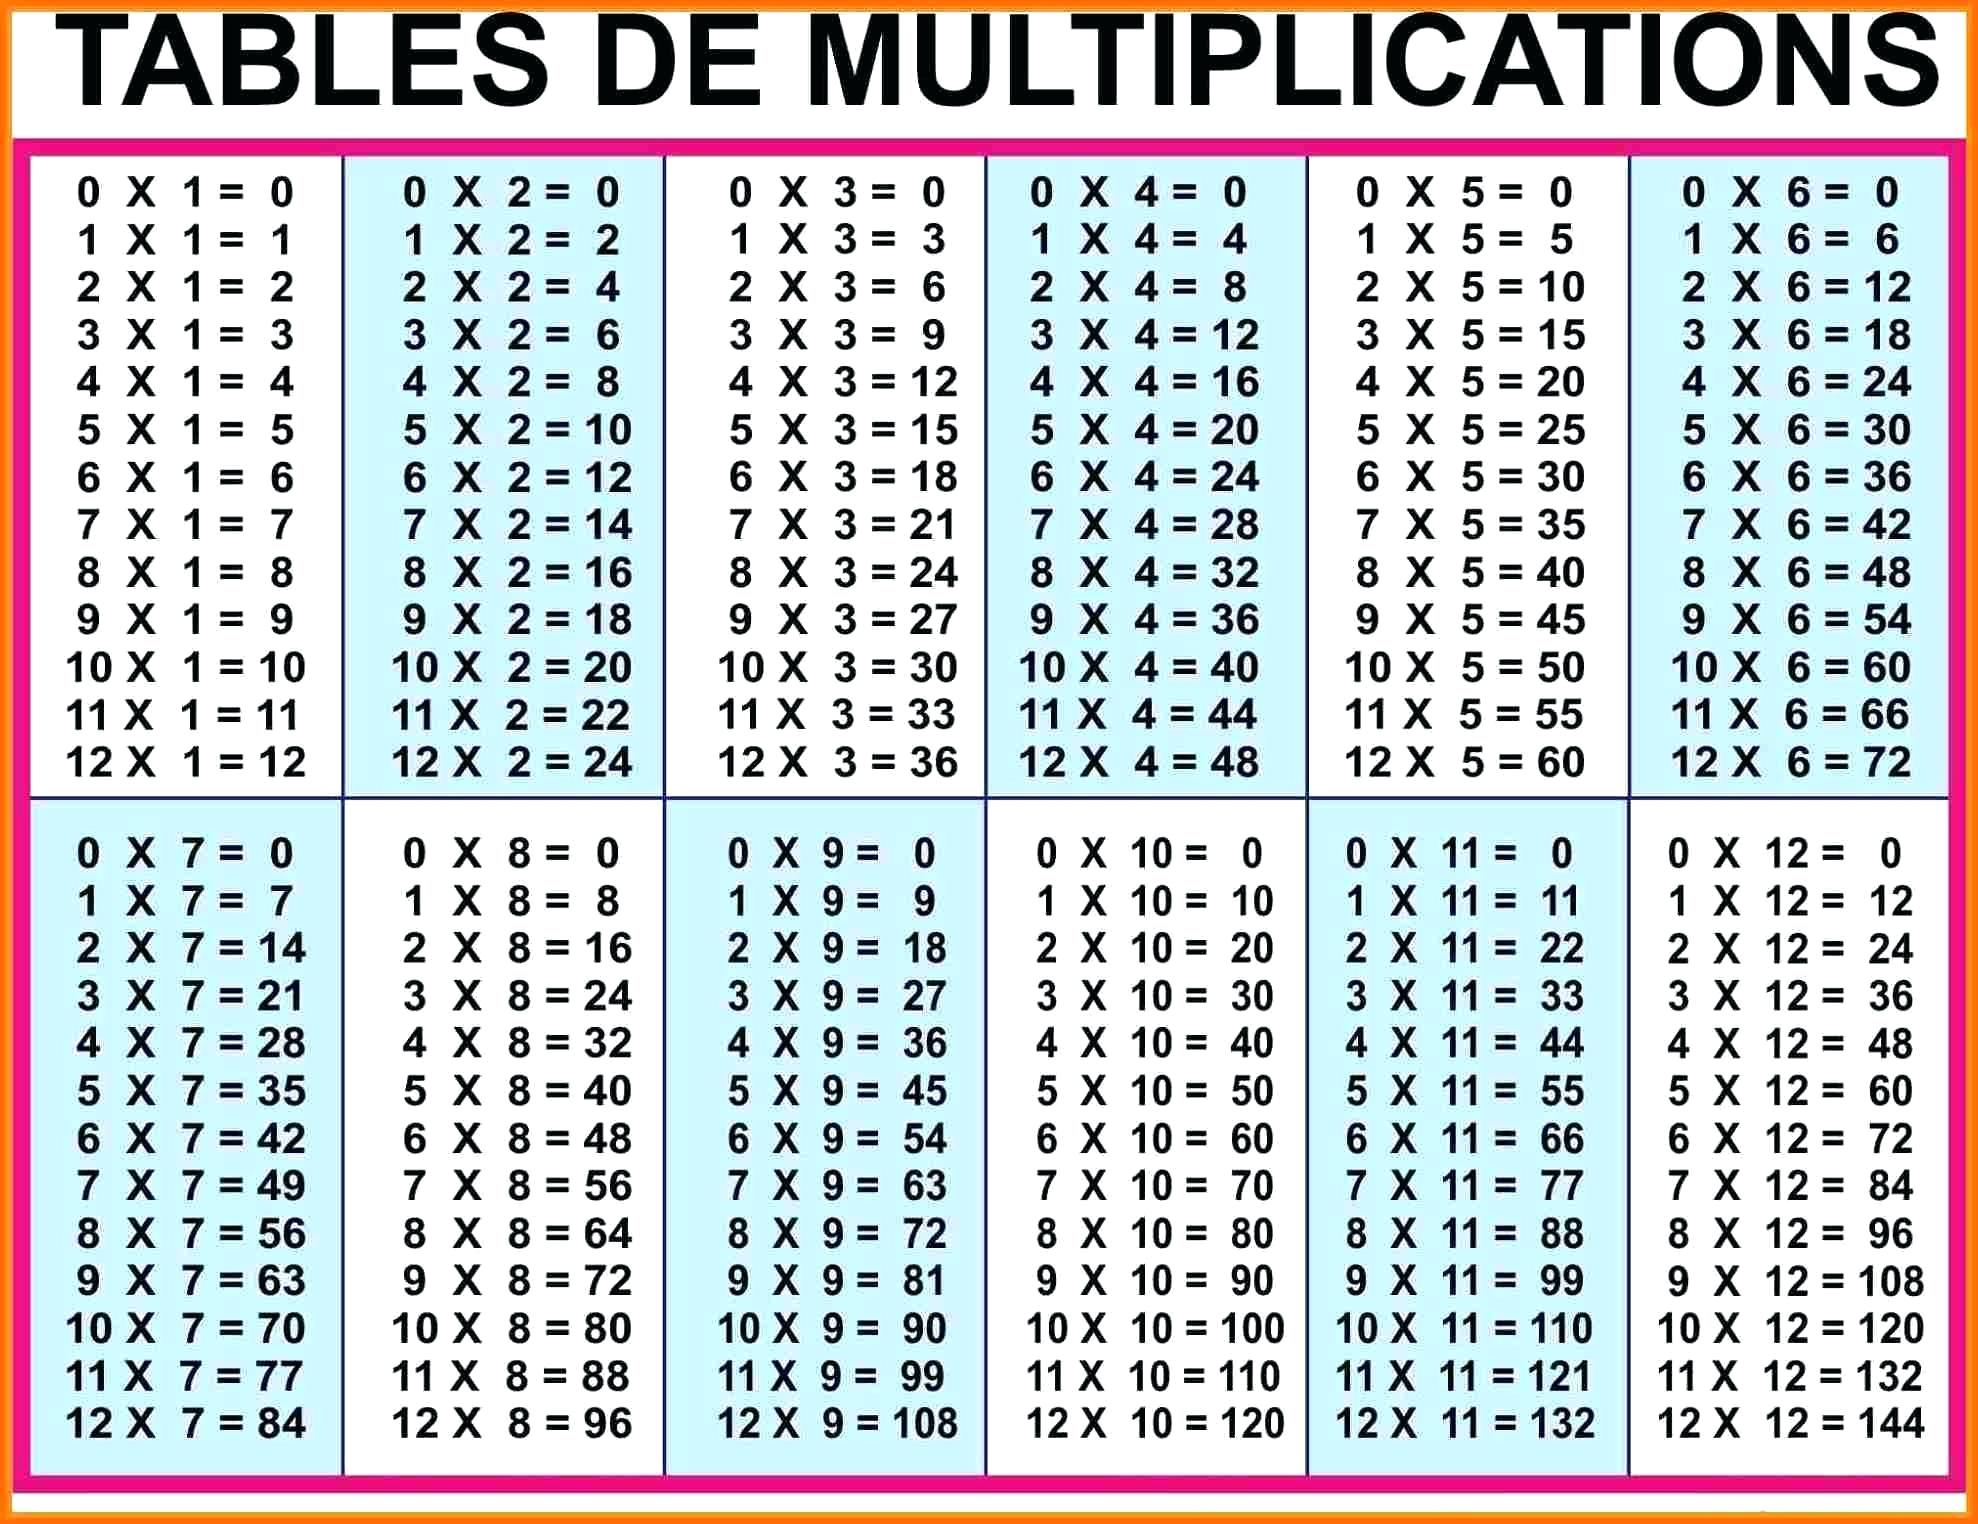 Multiplication Table Worksheets 1 12 | Printable Worksheets inside Free Printable Multiplication Quiz 0-12